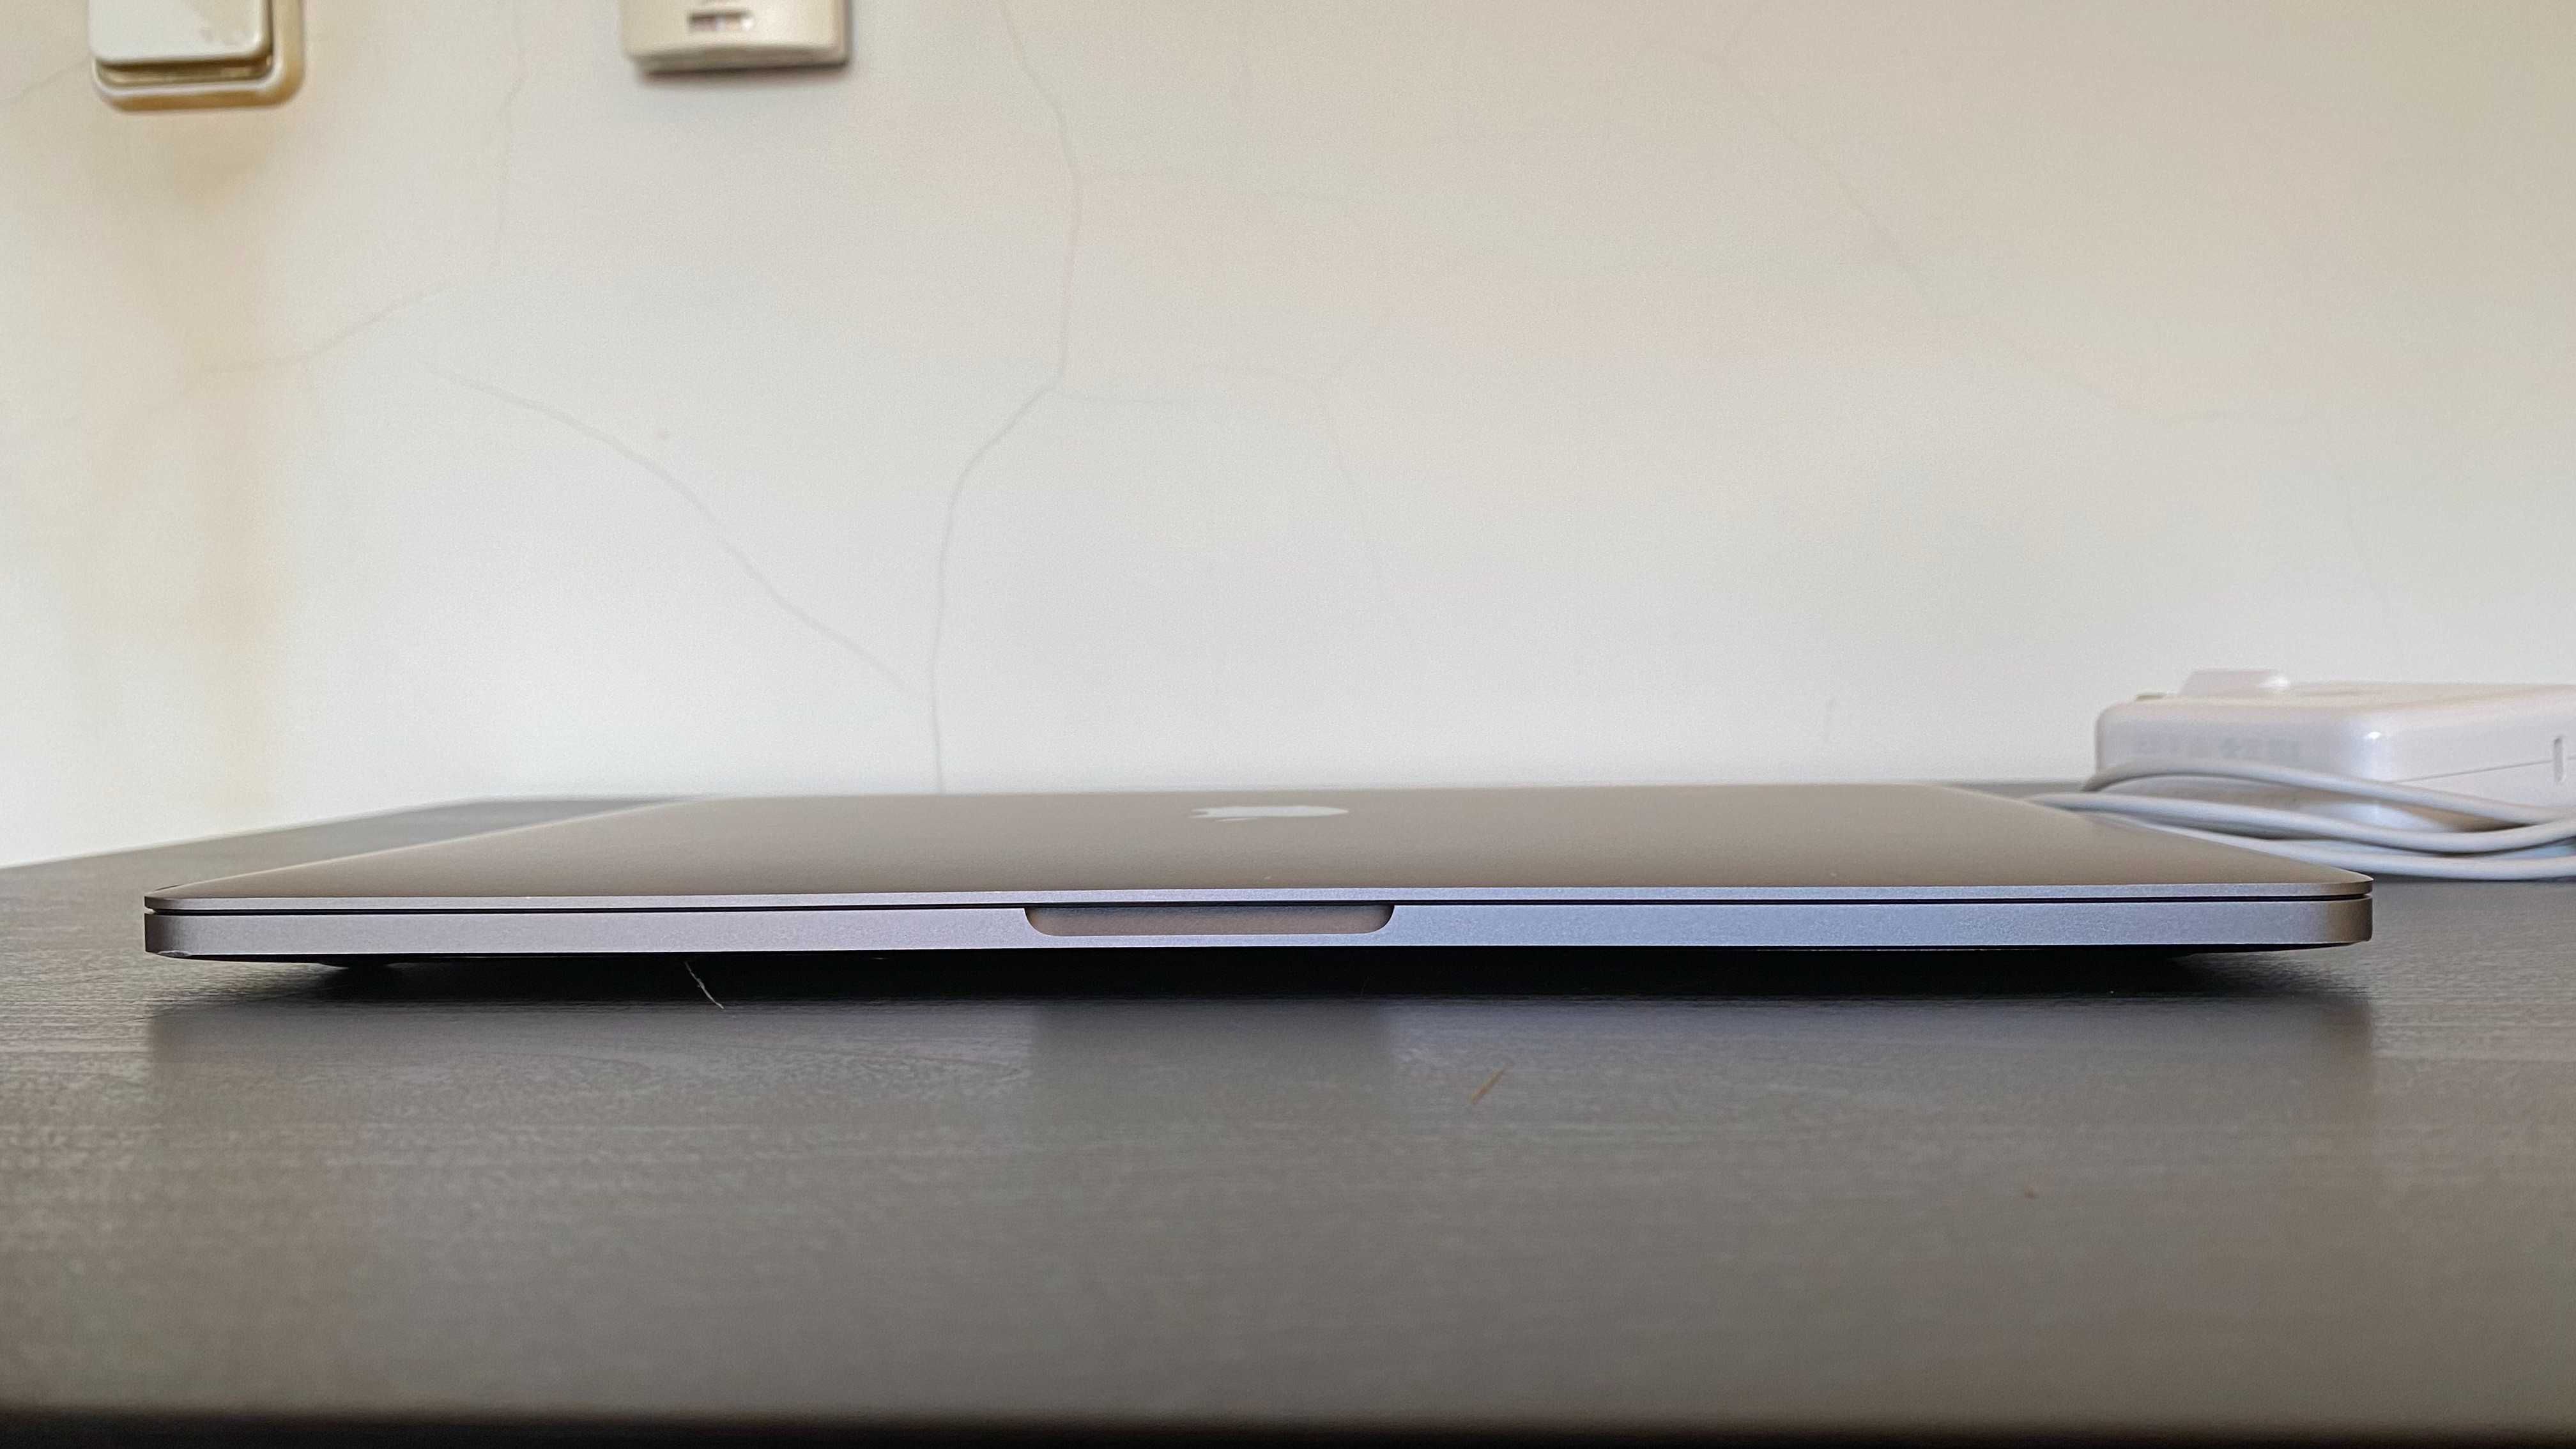 MacBook Pro 13-inch 2018 - Four Thunderbolt 3 Ports